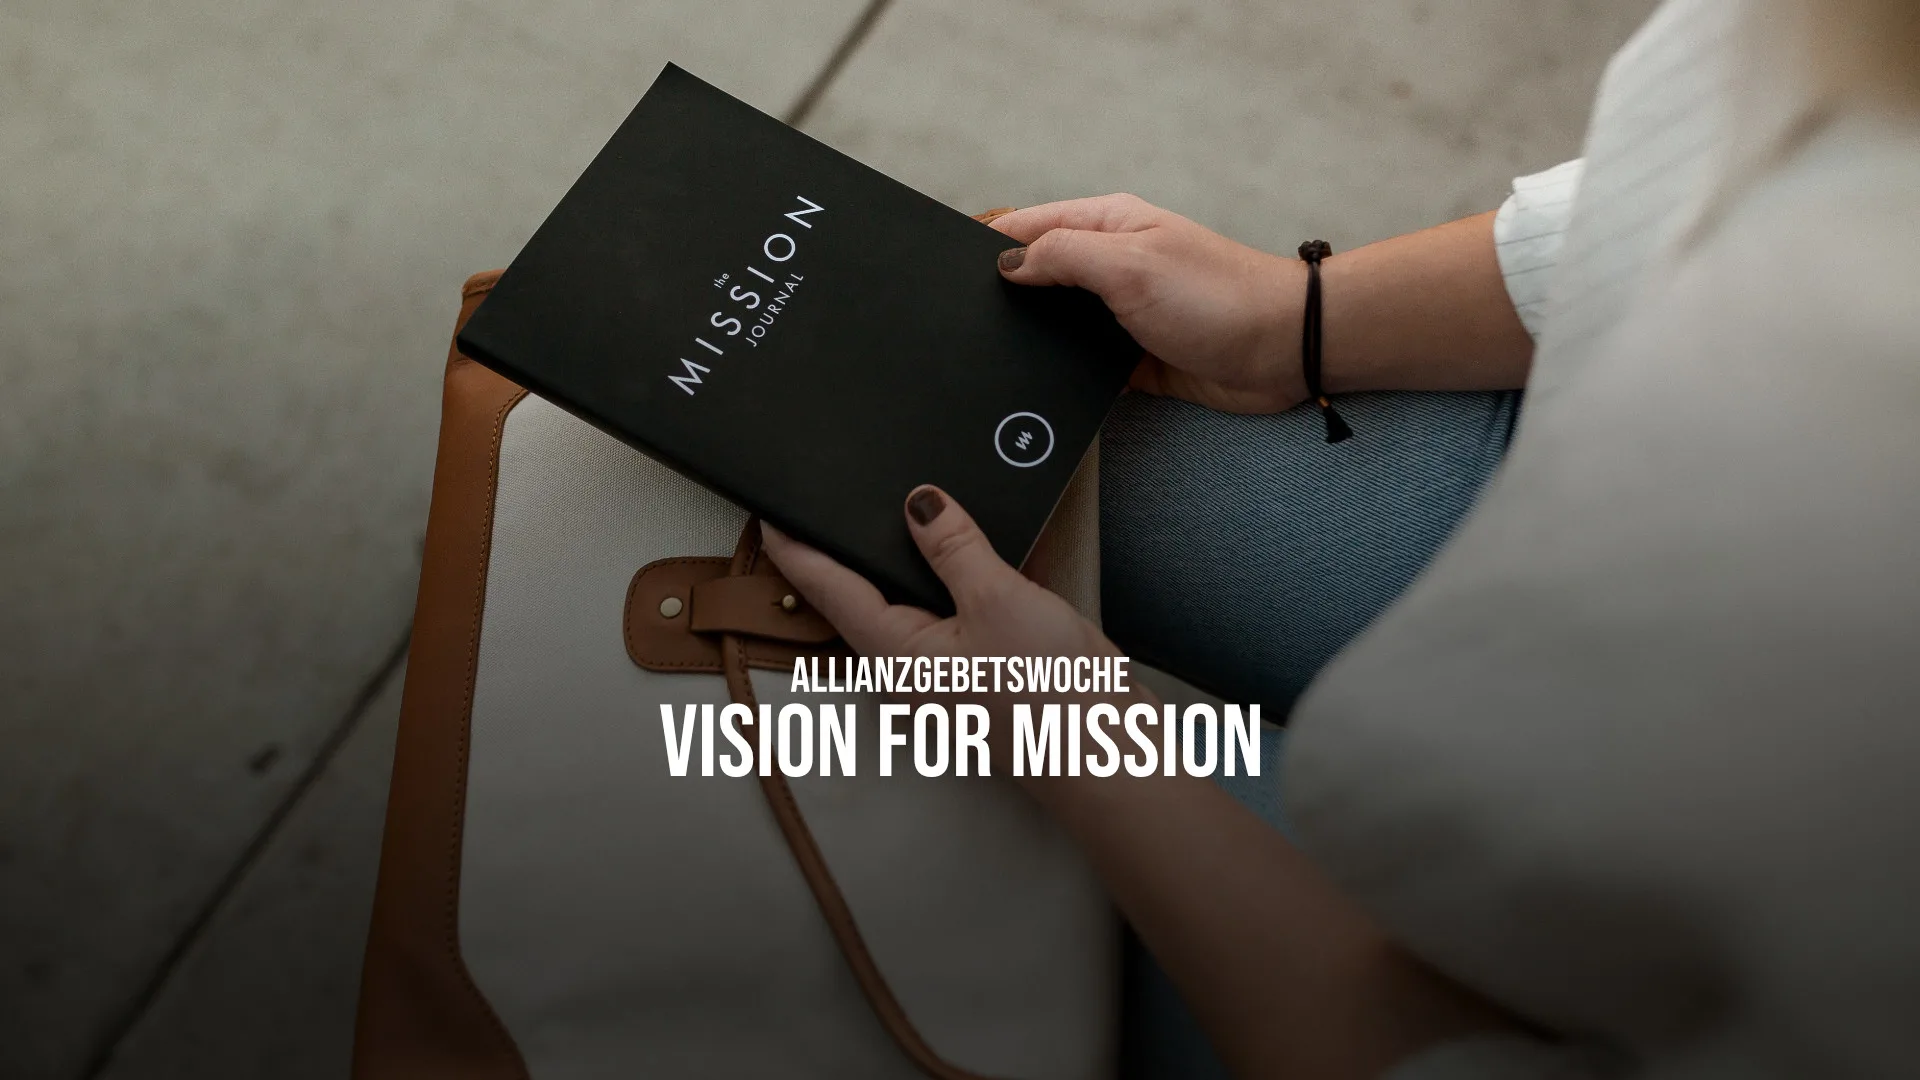 Allianzgebetswoche - Vision for Mission